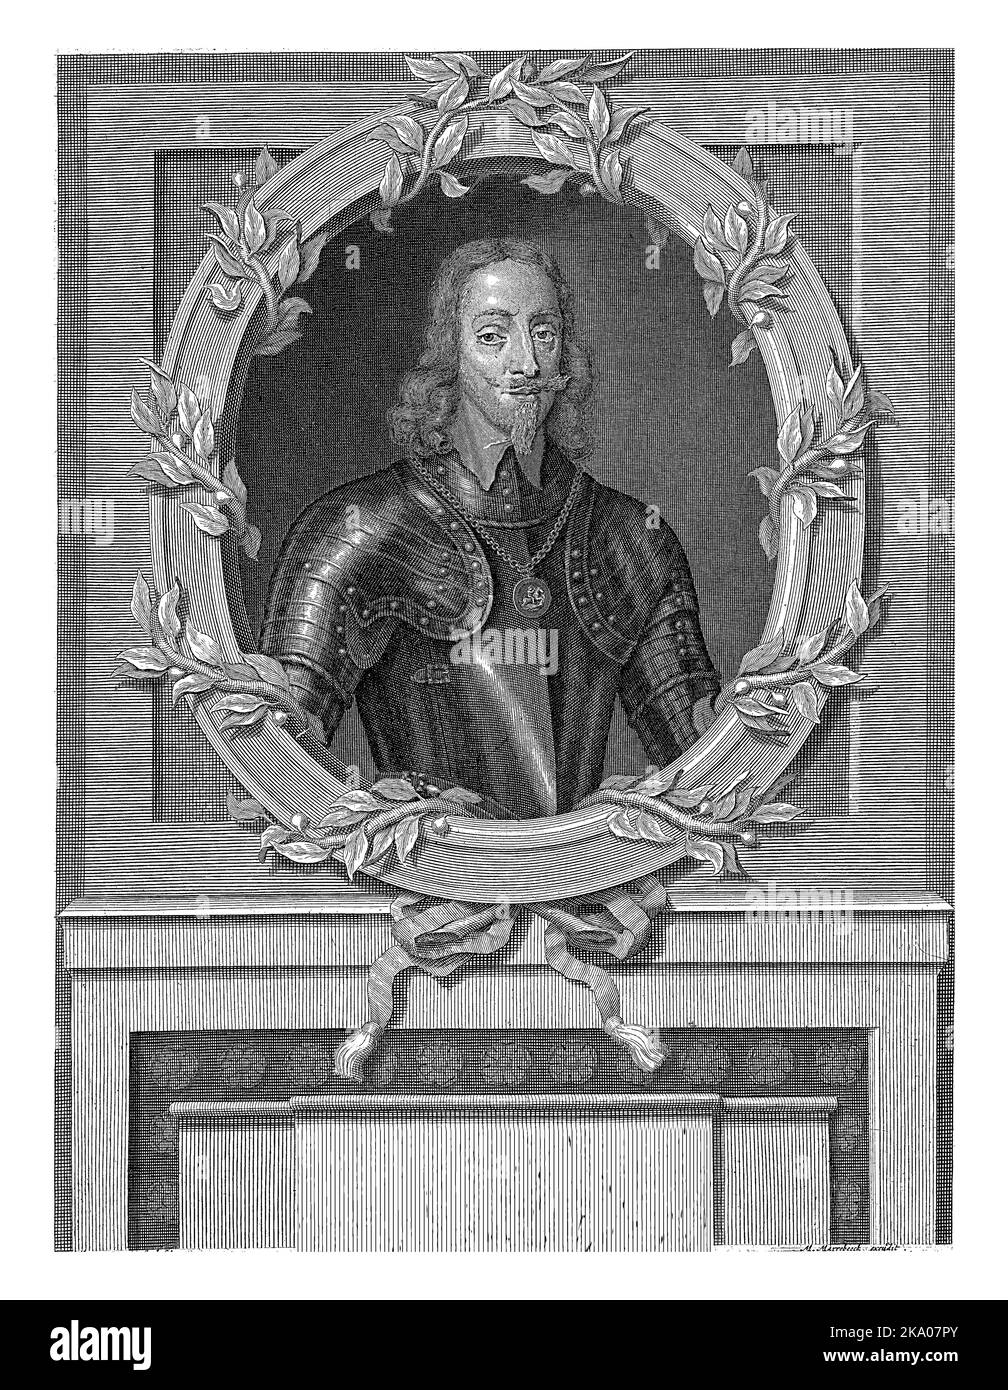 Ritratto di Carlo i d'Inghilterra, Philip van Gunst, 1685 - 1732 Carlo i Stuart, Re d'Inghilterra e Scozia. Foto Stock